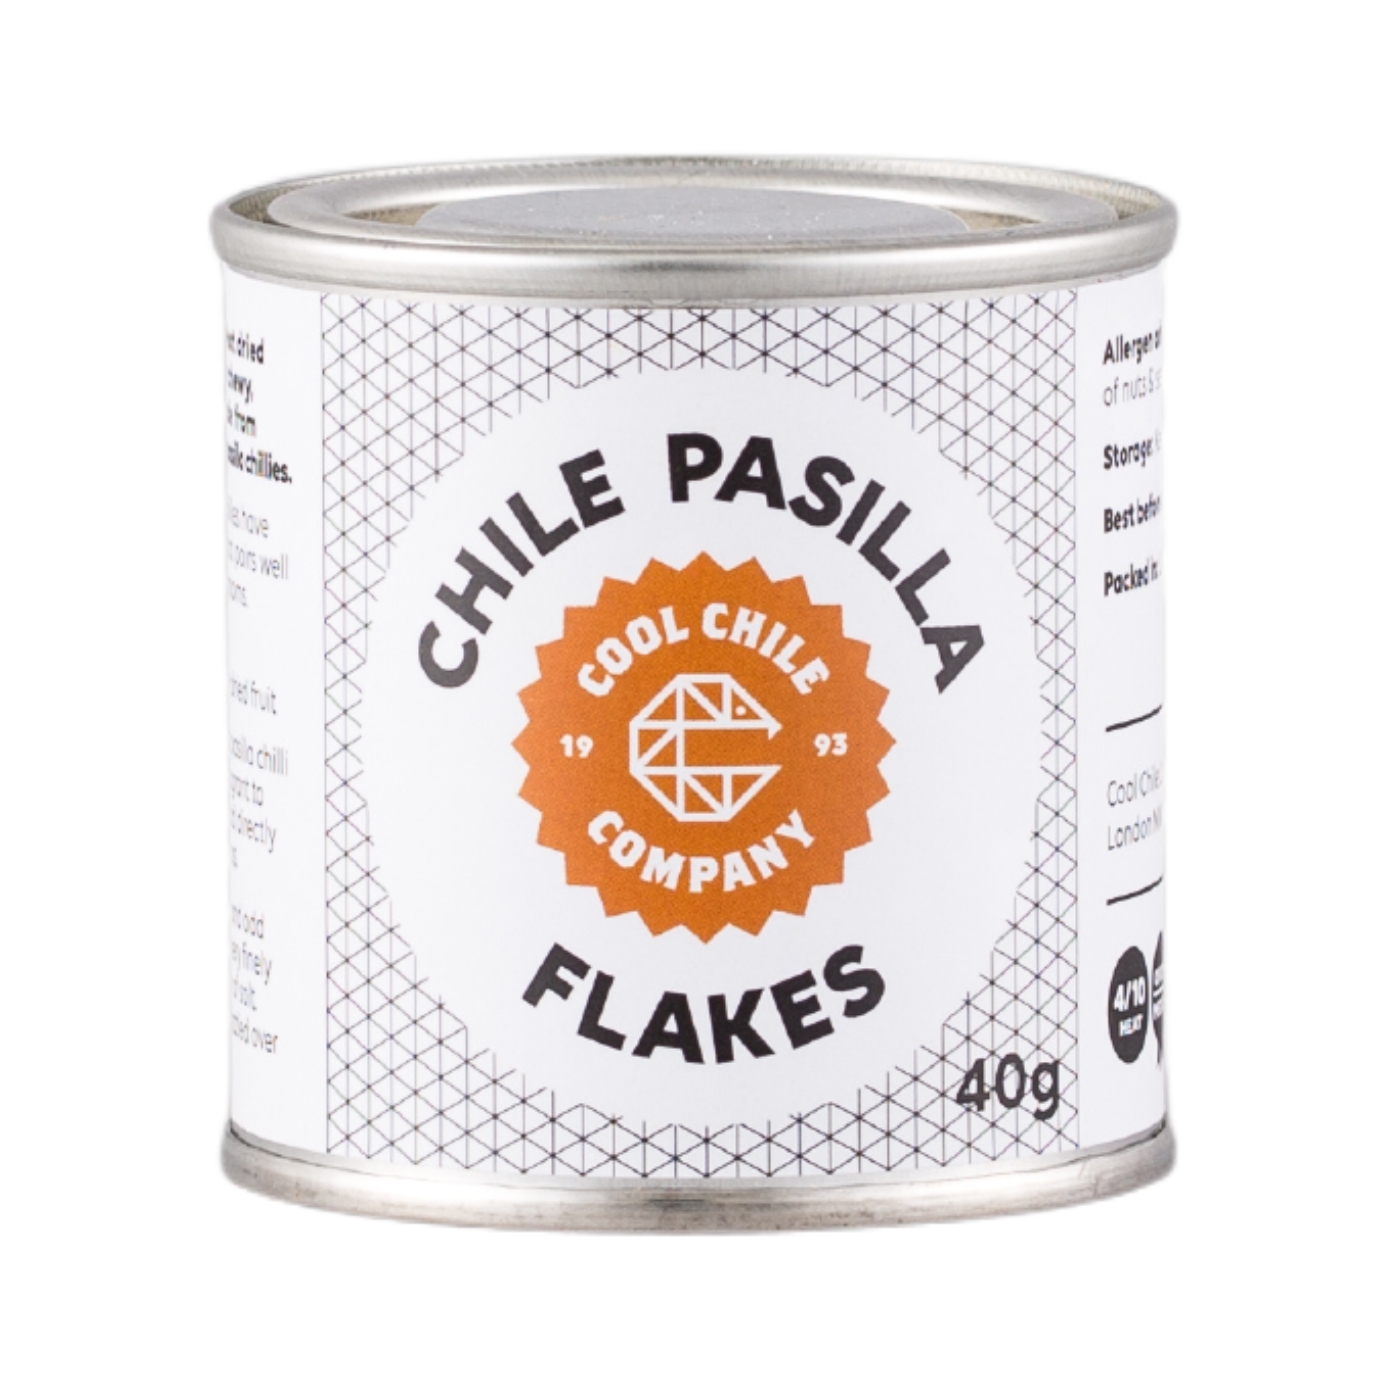 Pasilla flakes 40g - product image